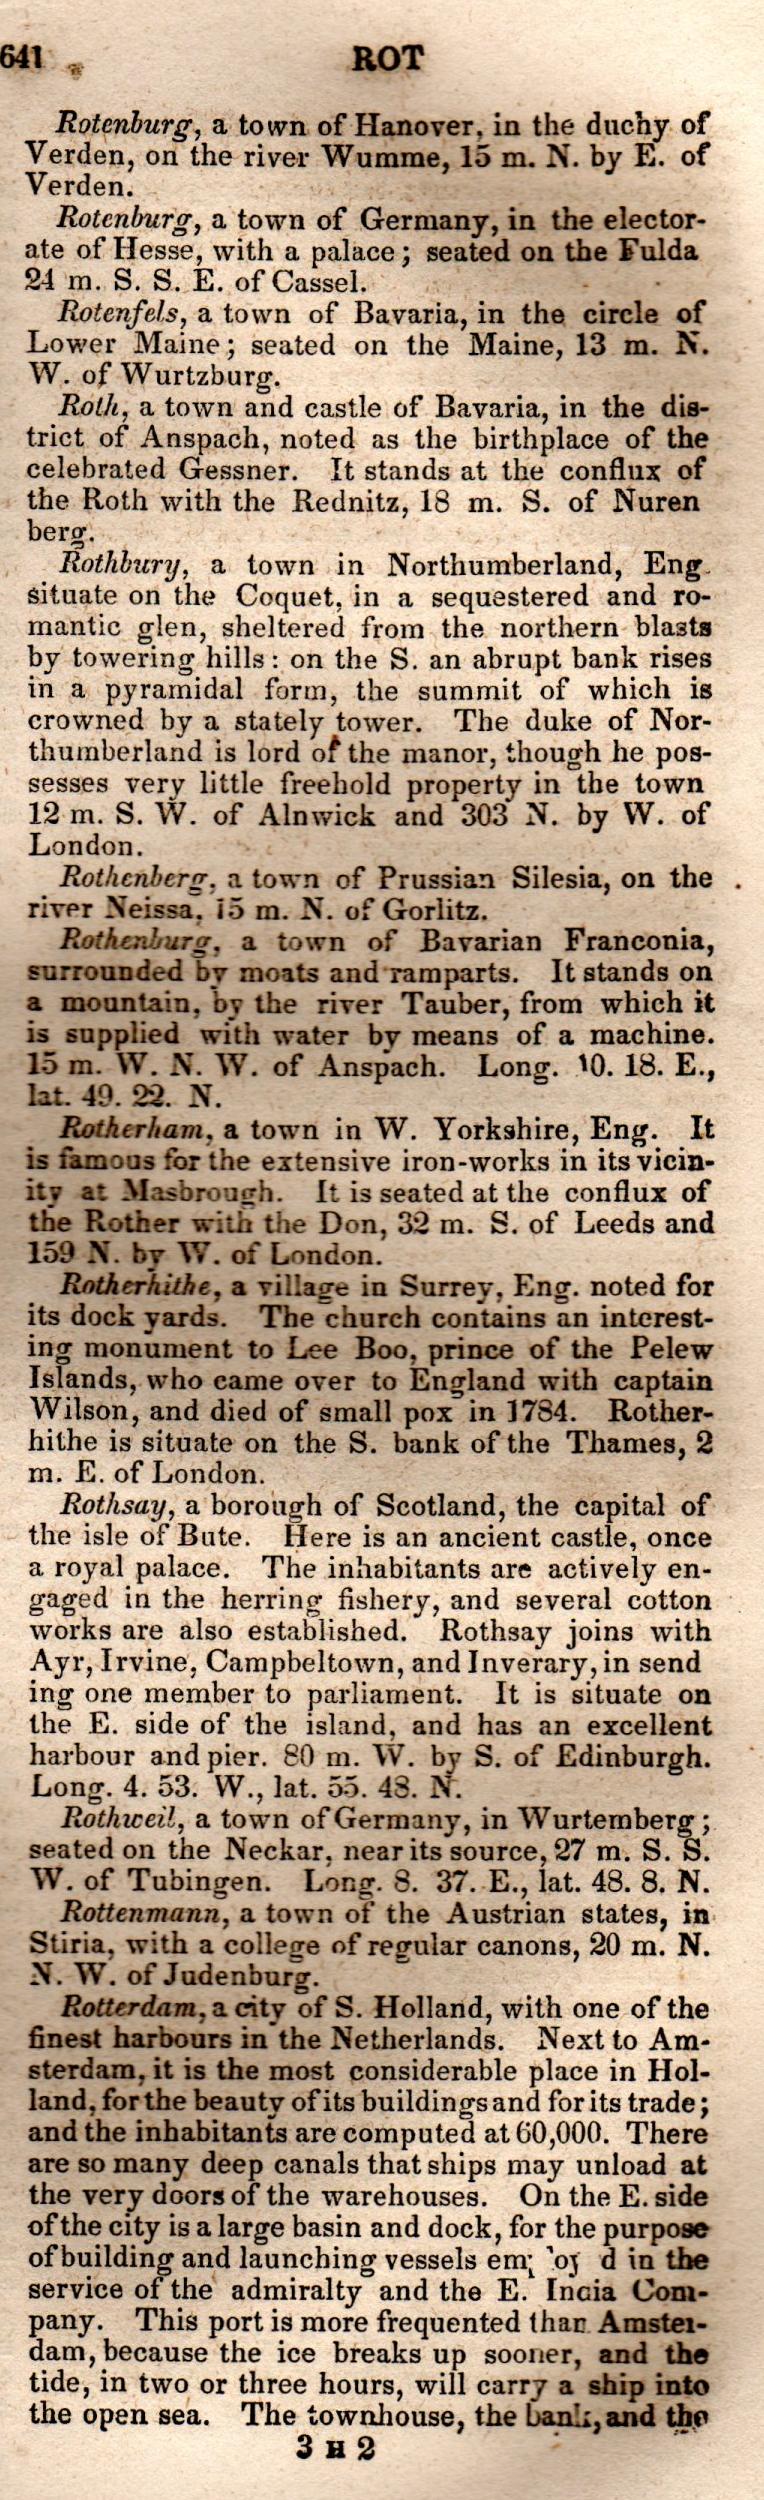 Brookes’ Universal Gazetteer (1850), Page 641 Right Column